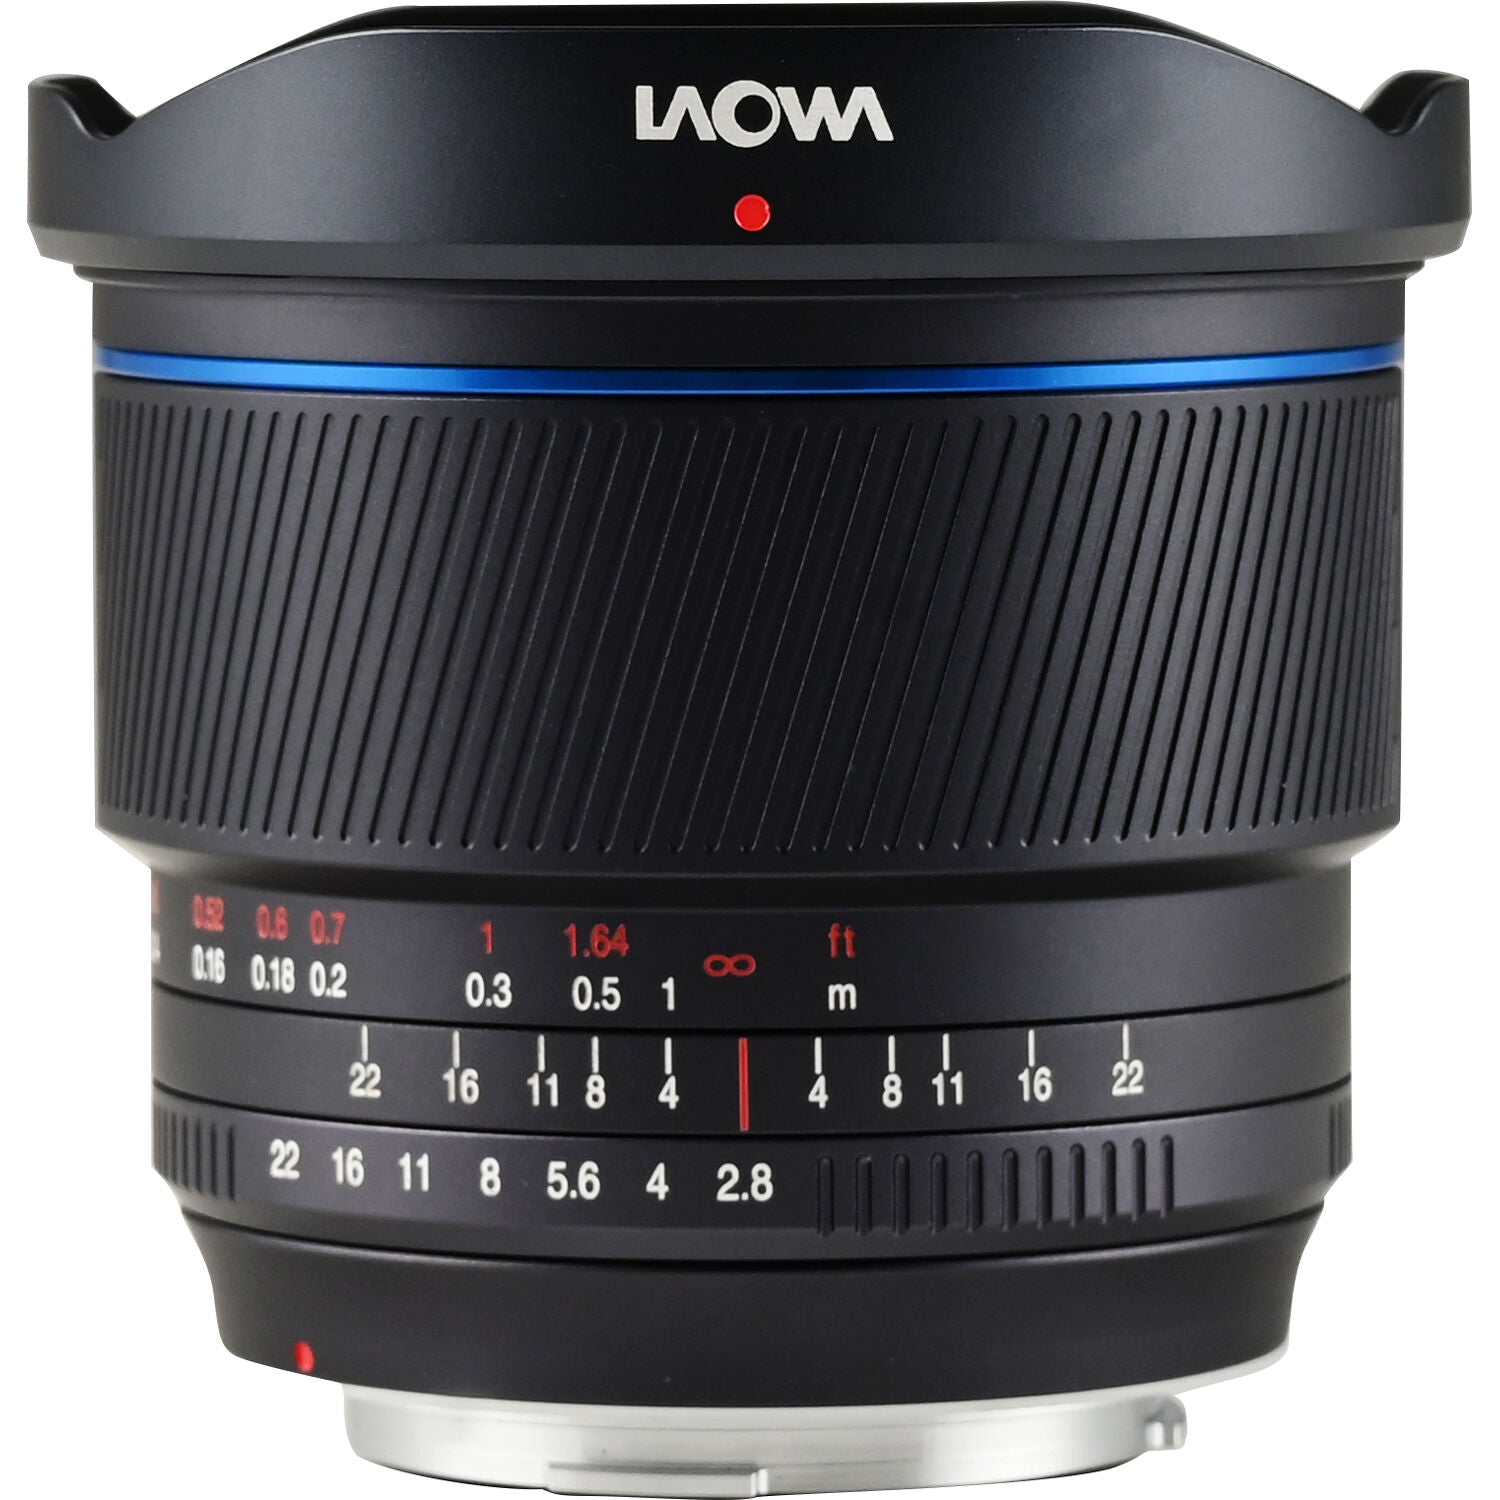 Venus Optics Laowa 10mm f/2.8 Zero-D FF 5 - Blade Aperture - Manual Focus Lens - Leica L mount